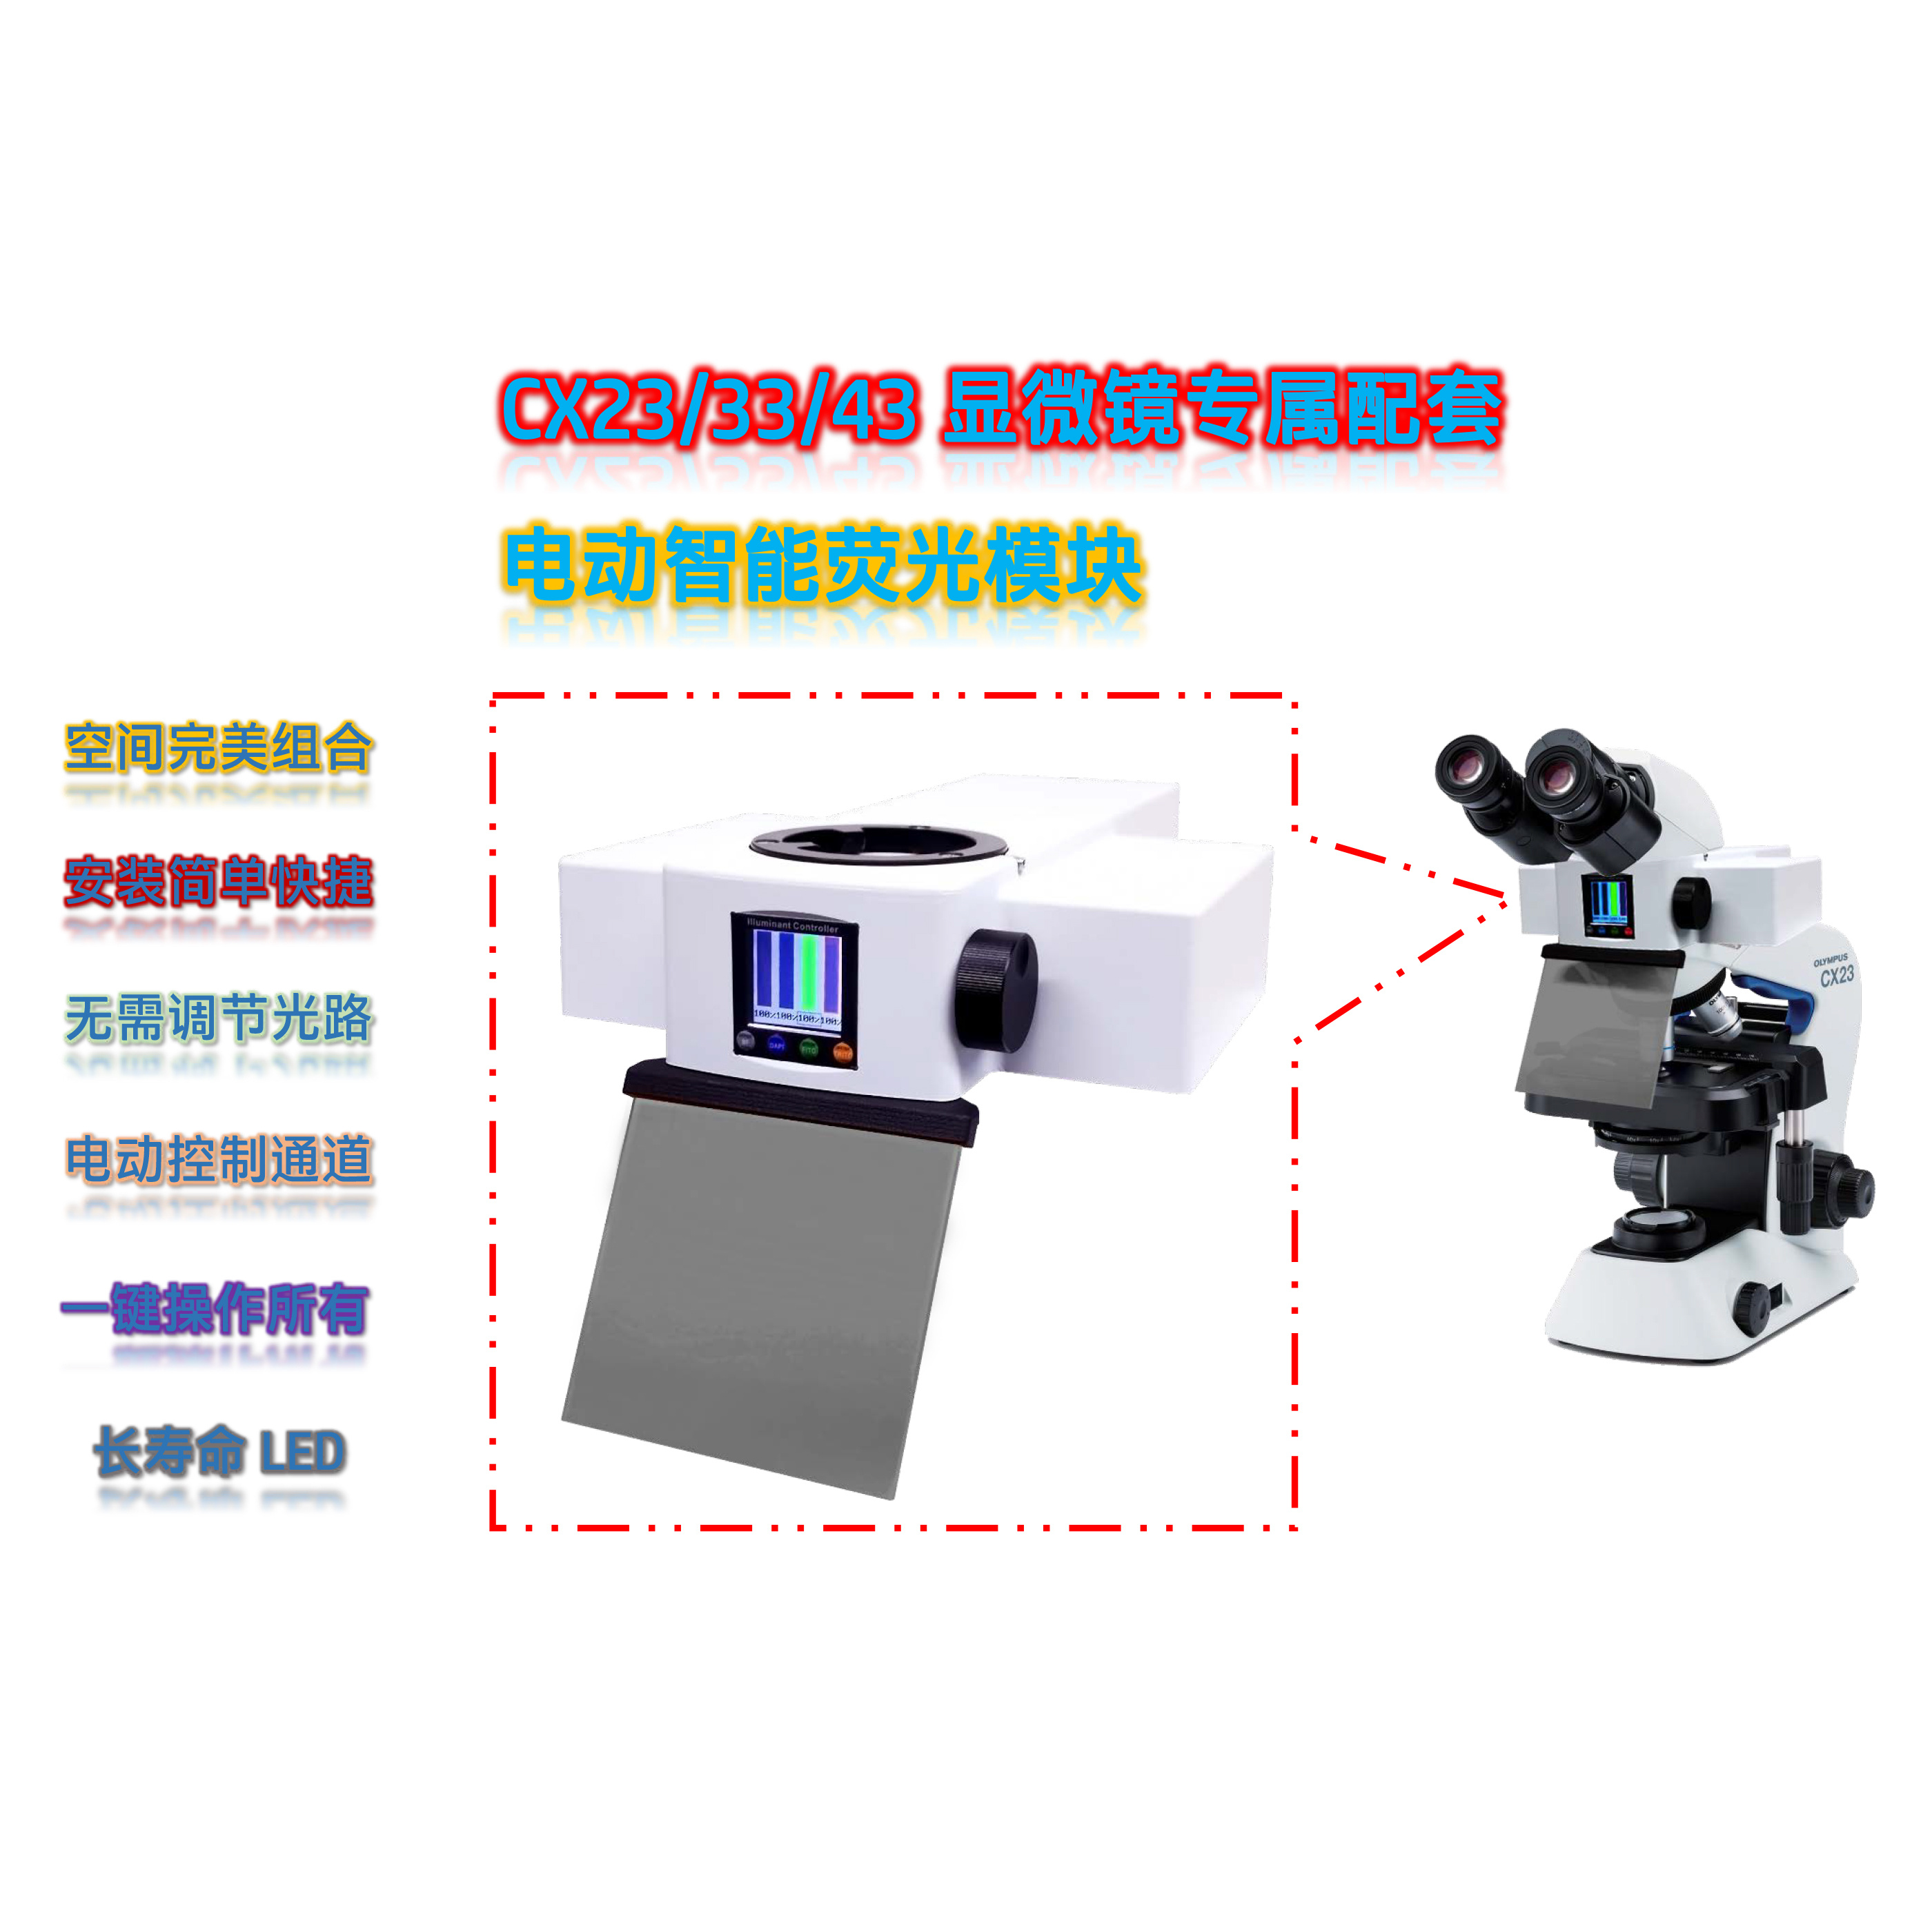 OLYPMUS显微镜CX23/33/43荧光附件正置荧光模块CX-UVBGY-E